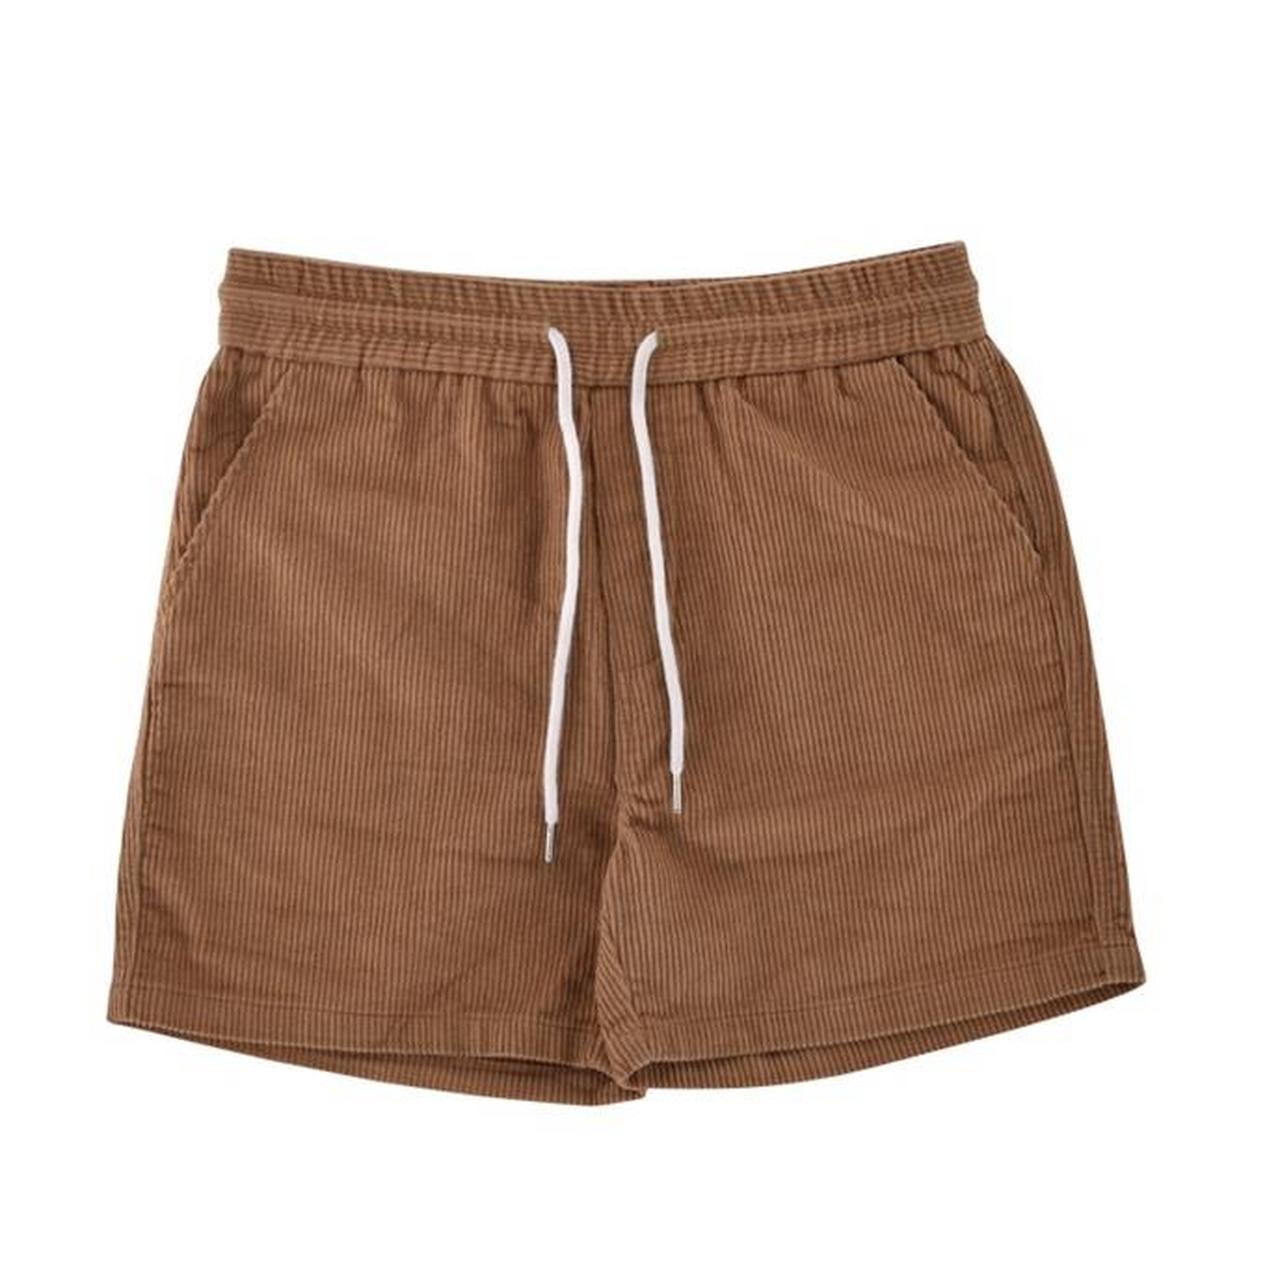 Corduroy Shorts Wheat Our New Corduroy Shorts... - Depop